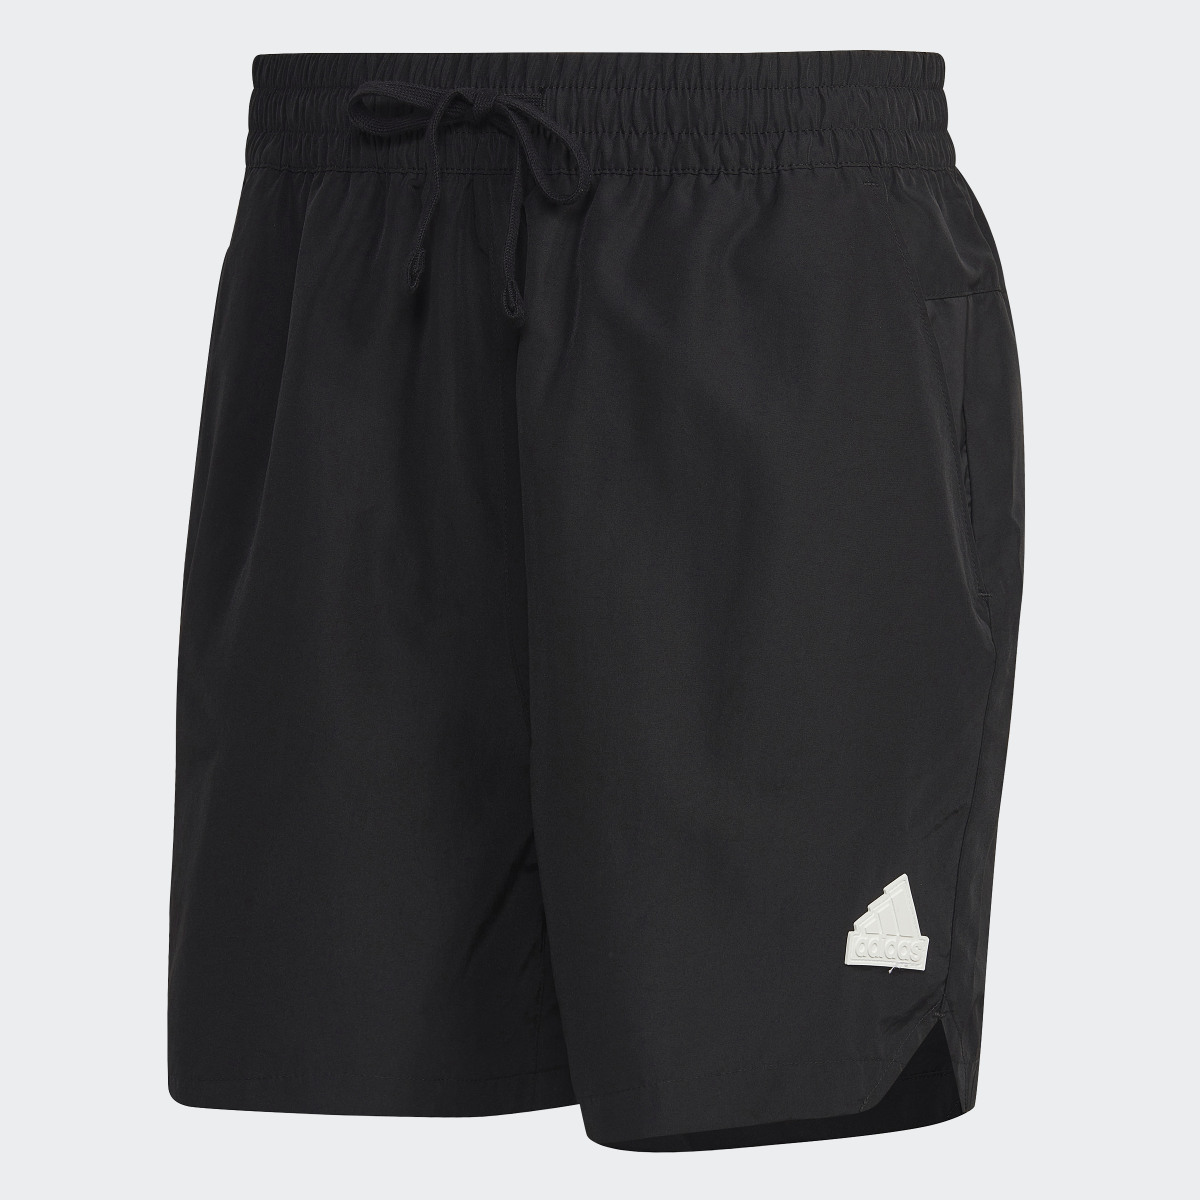 Adidas Tech Shorts. 5